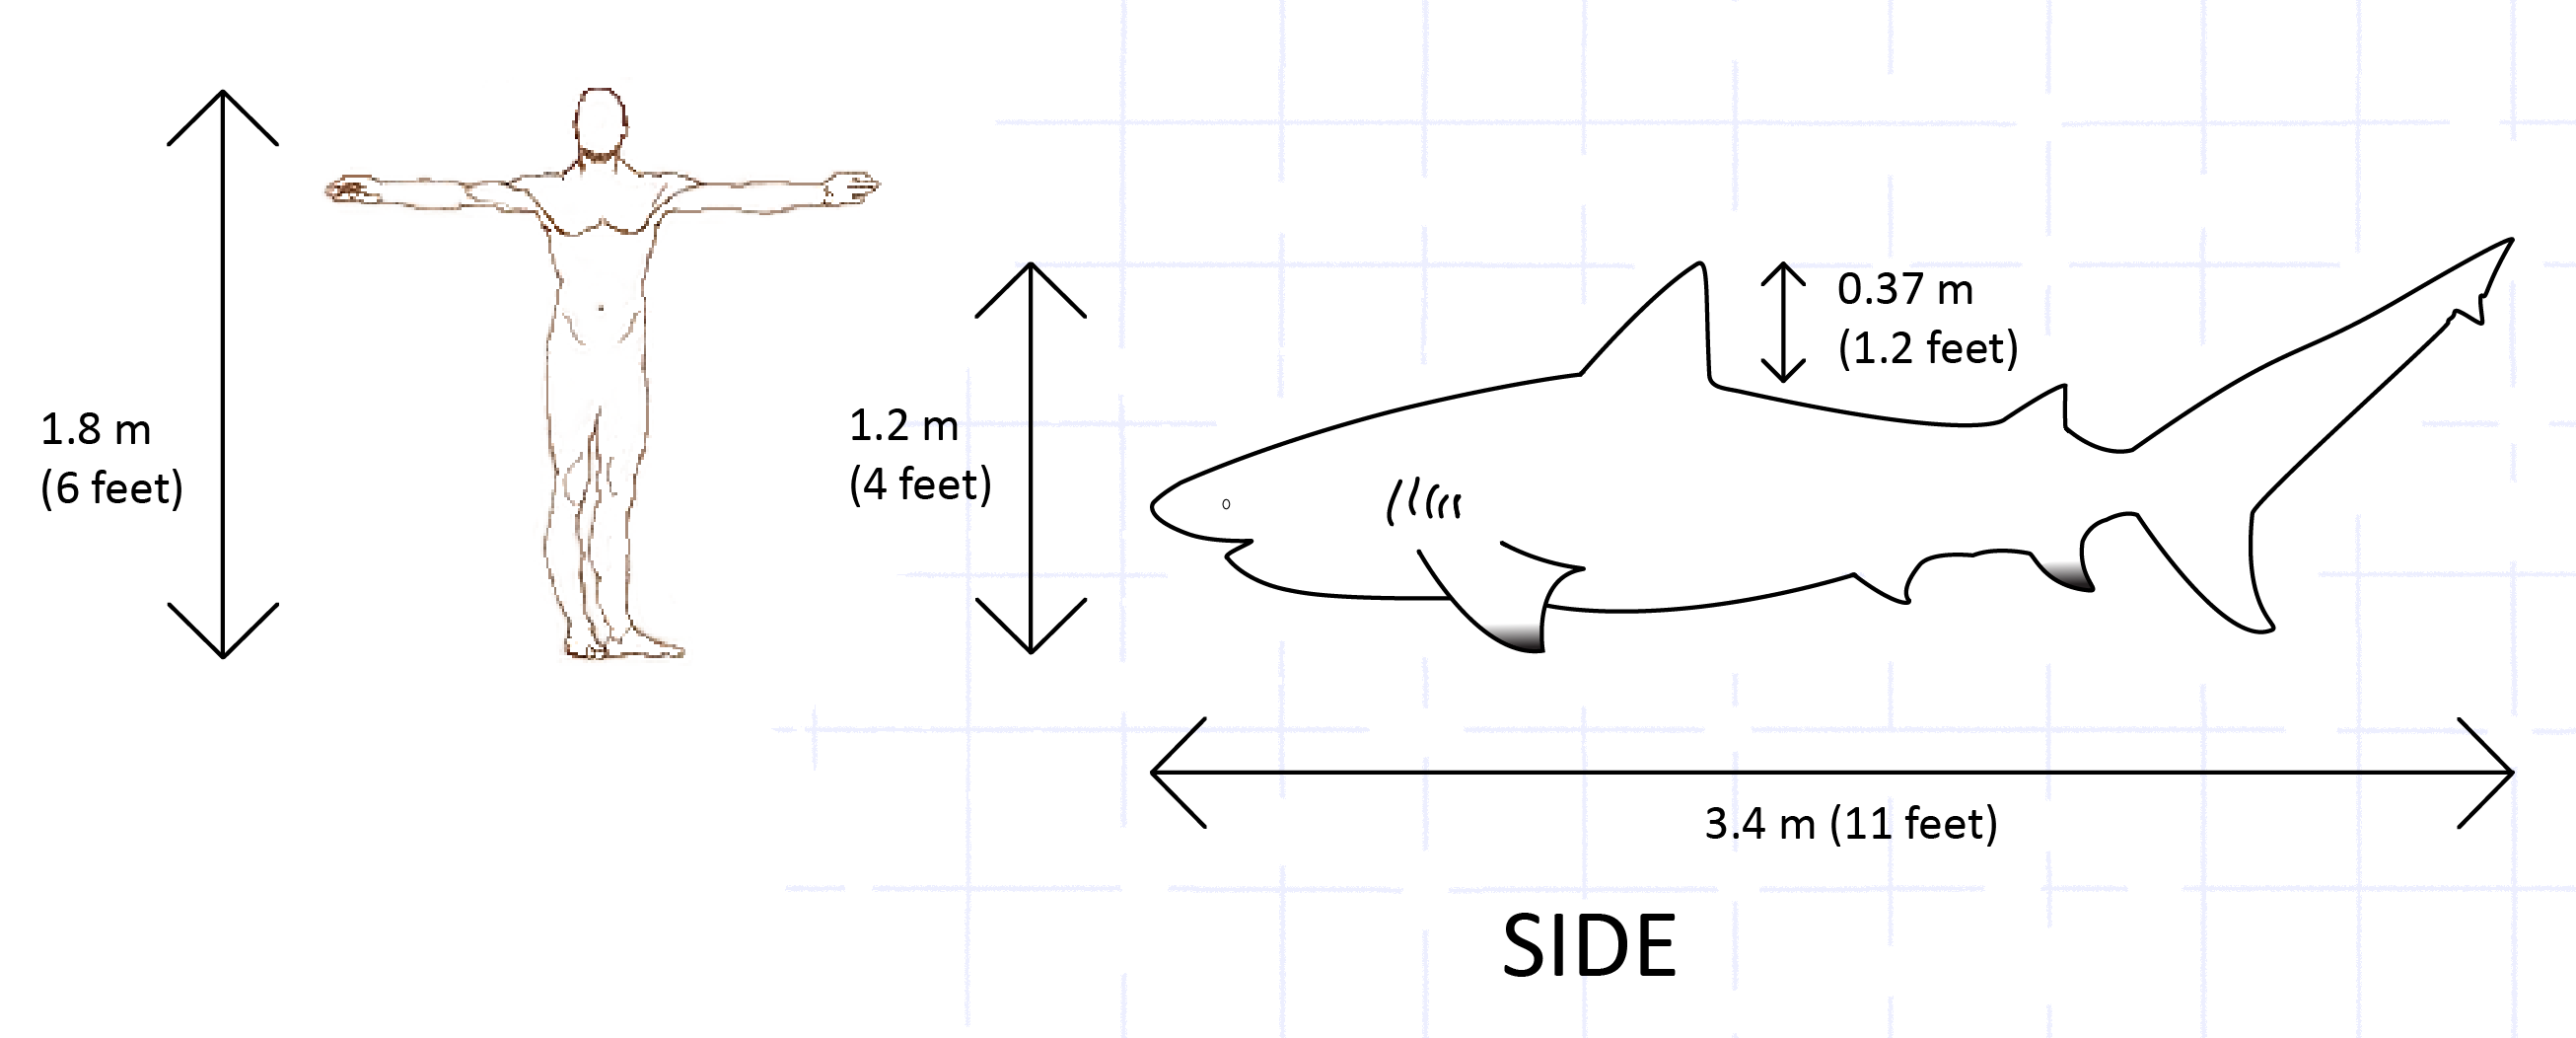 bull shark vs man size comparison relative length width height dimensions